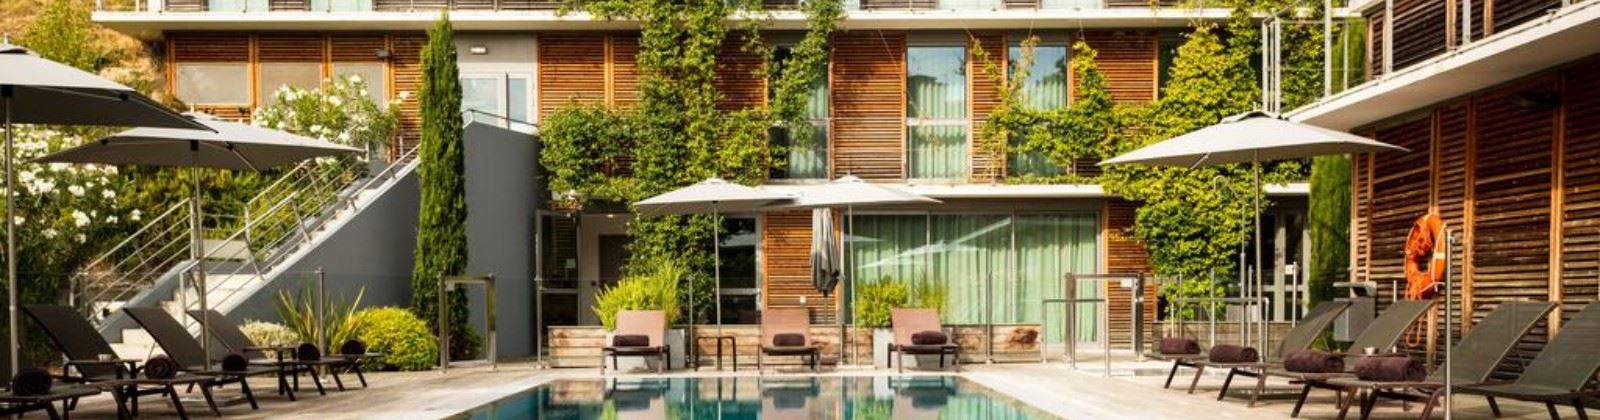 OLEVENE image - courtyard-by-marriott-montpellier-olevene-restaurant-hotel-meeting-